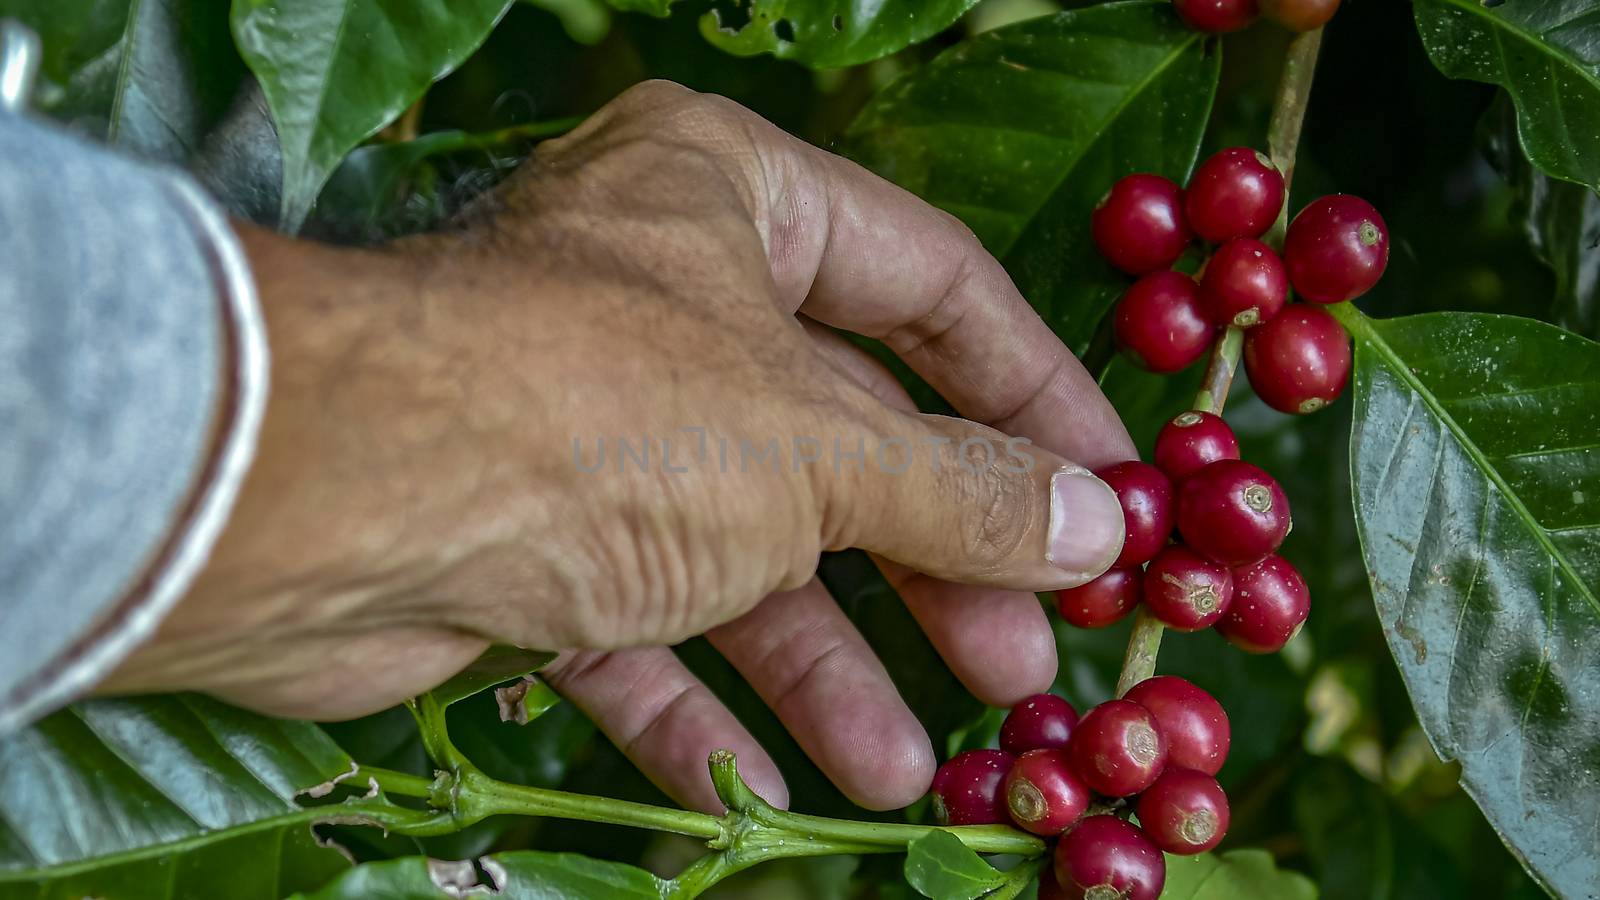 farmer picking ripe cherry beans. Coffee farmer picking ripe che by Aedka_Stodio